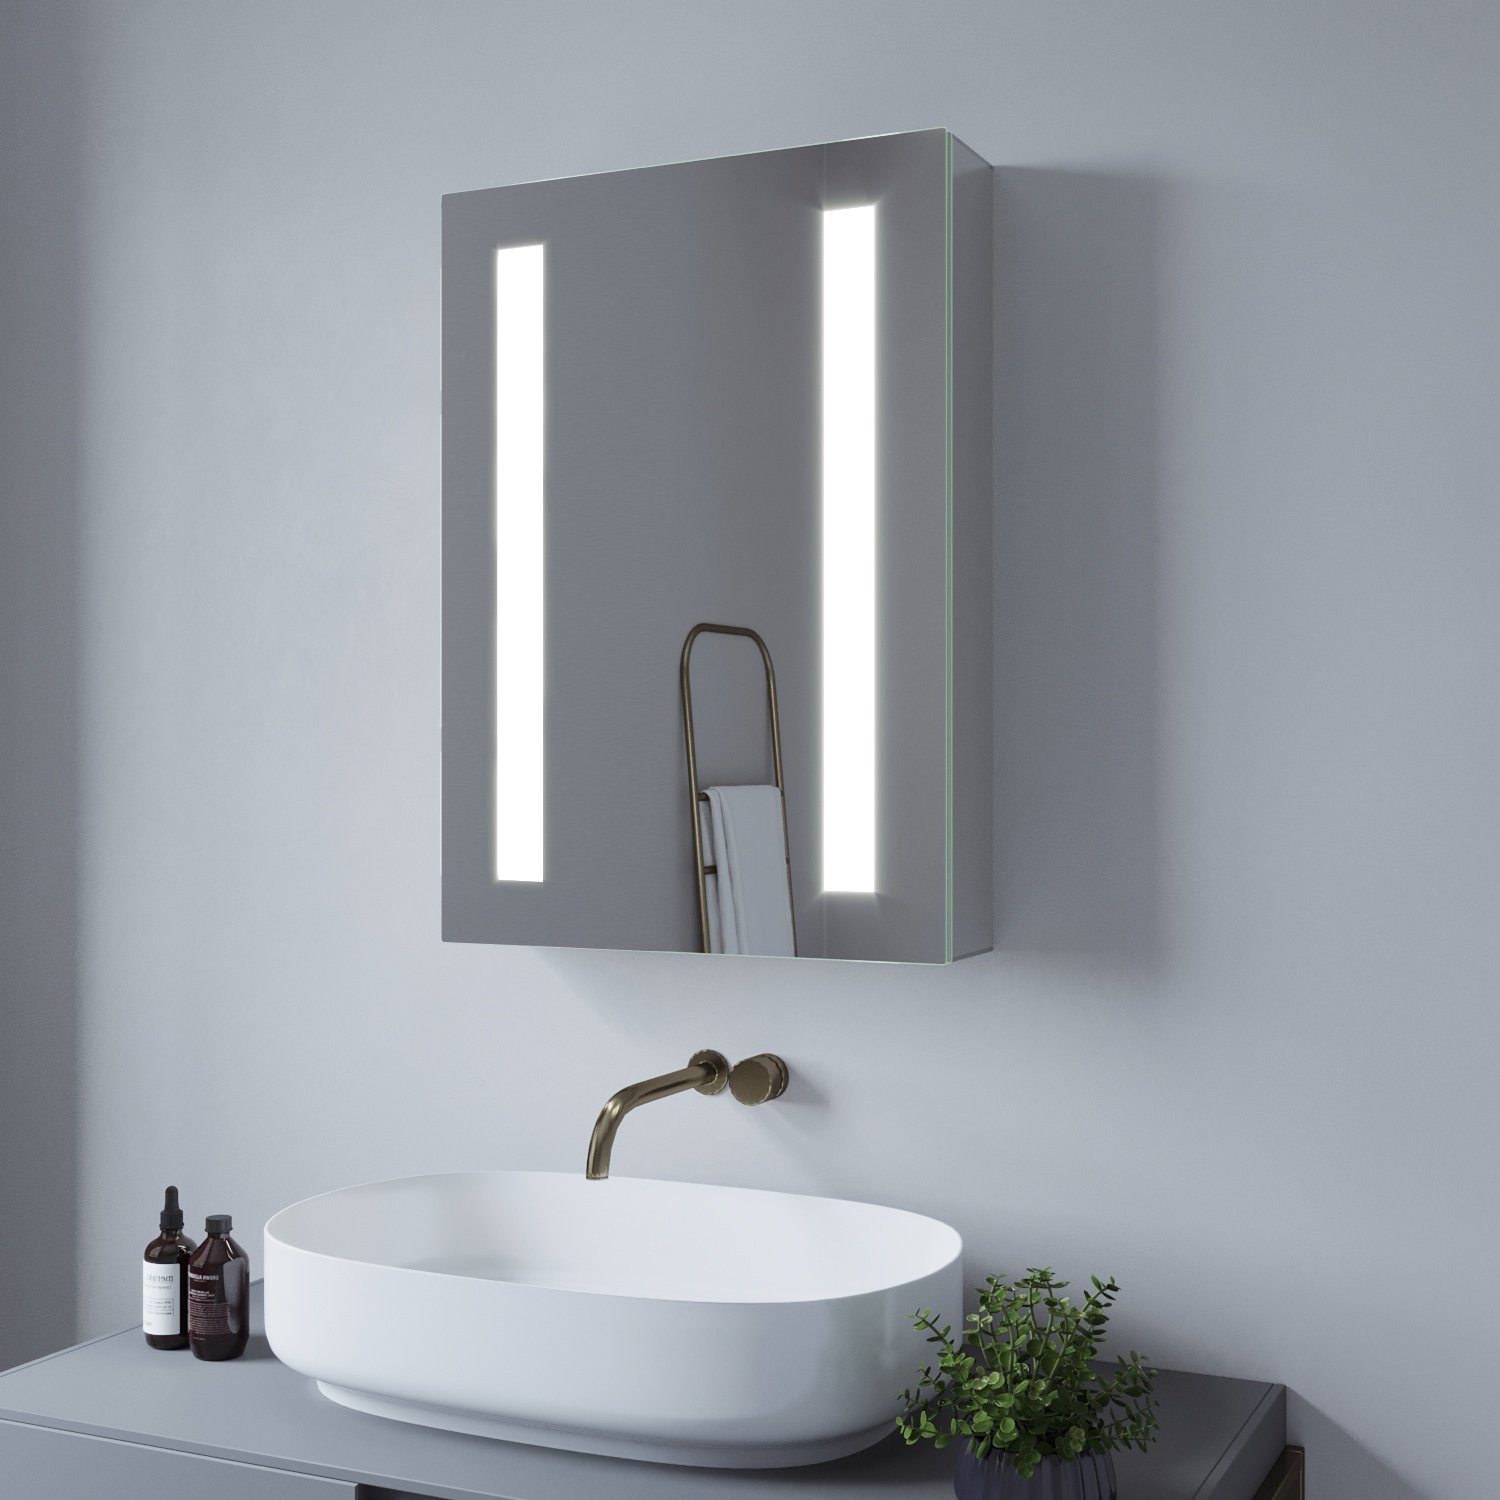 AQUABATOS Spiegelschrank Spiegelschrank mit Beleuchtung 50x70cm Badezimmerschrank LED Spiegel dimmbar, IR-Sensor, Memory-Funktion, Anti-Beschlag, Spiegelheizung